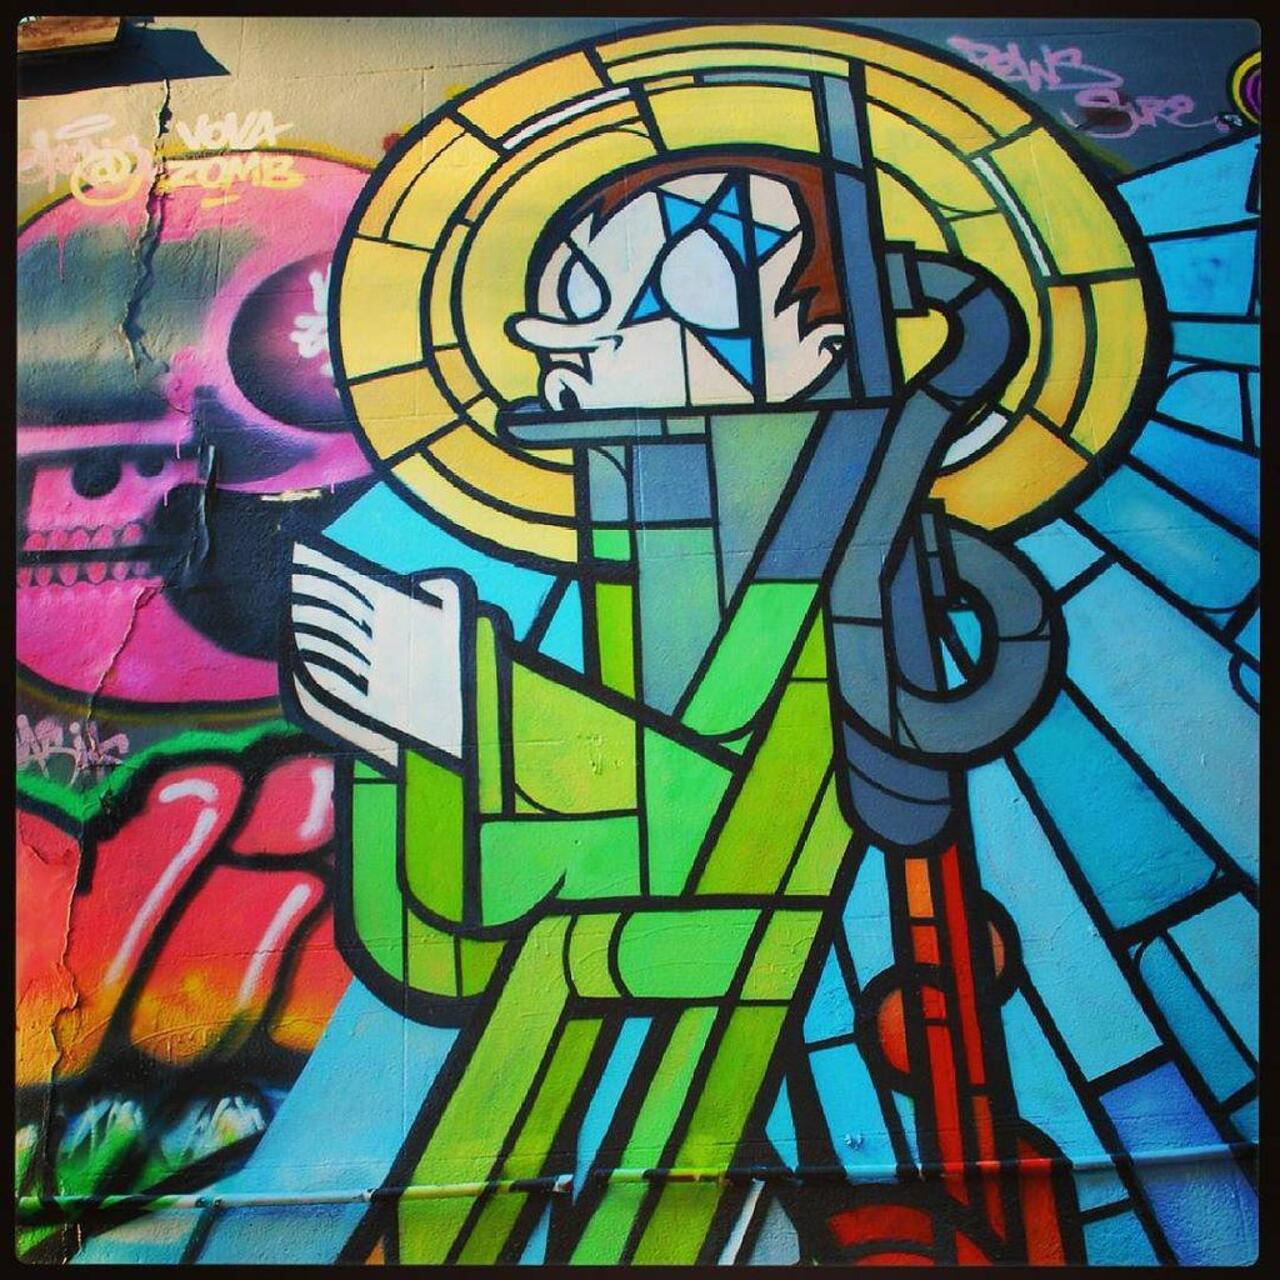 Art by Vova Zomb  
#Graffiti #StreetArt #UrbanArt #VovaZomb #StarYard #BrickLane #Shoreditch #London #Nikon #Nikon… http://t.co/VM9oI7JwpX